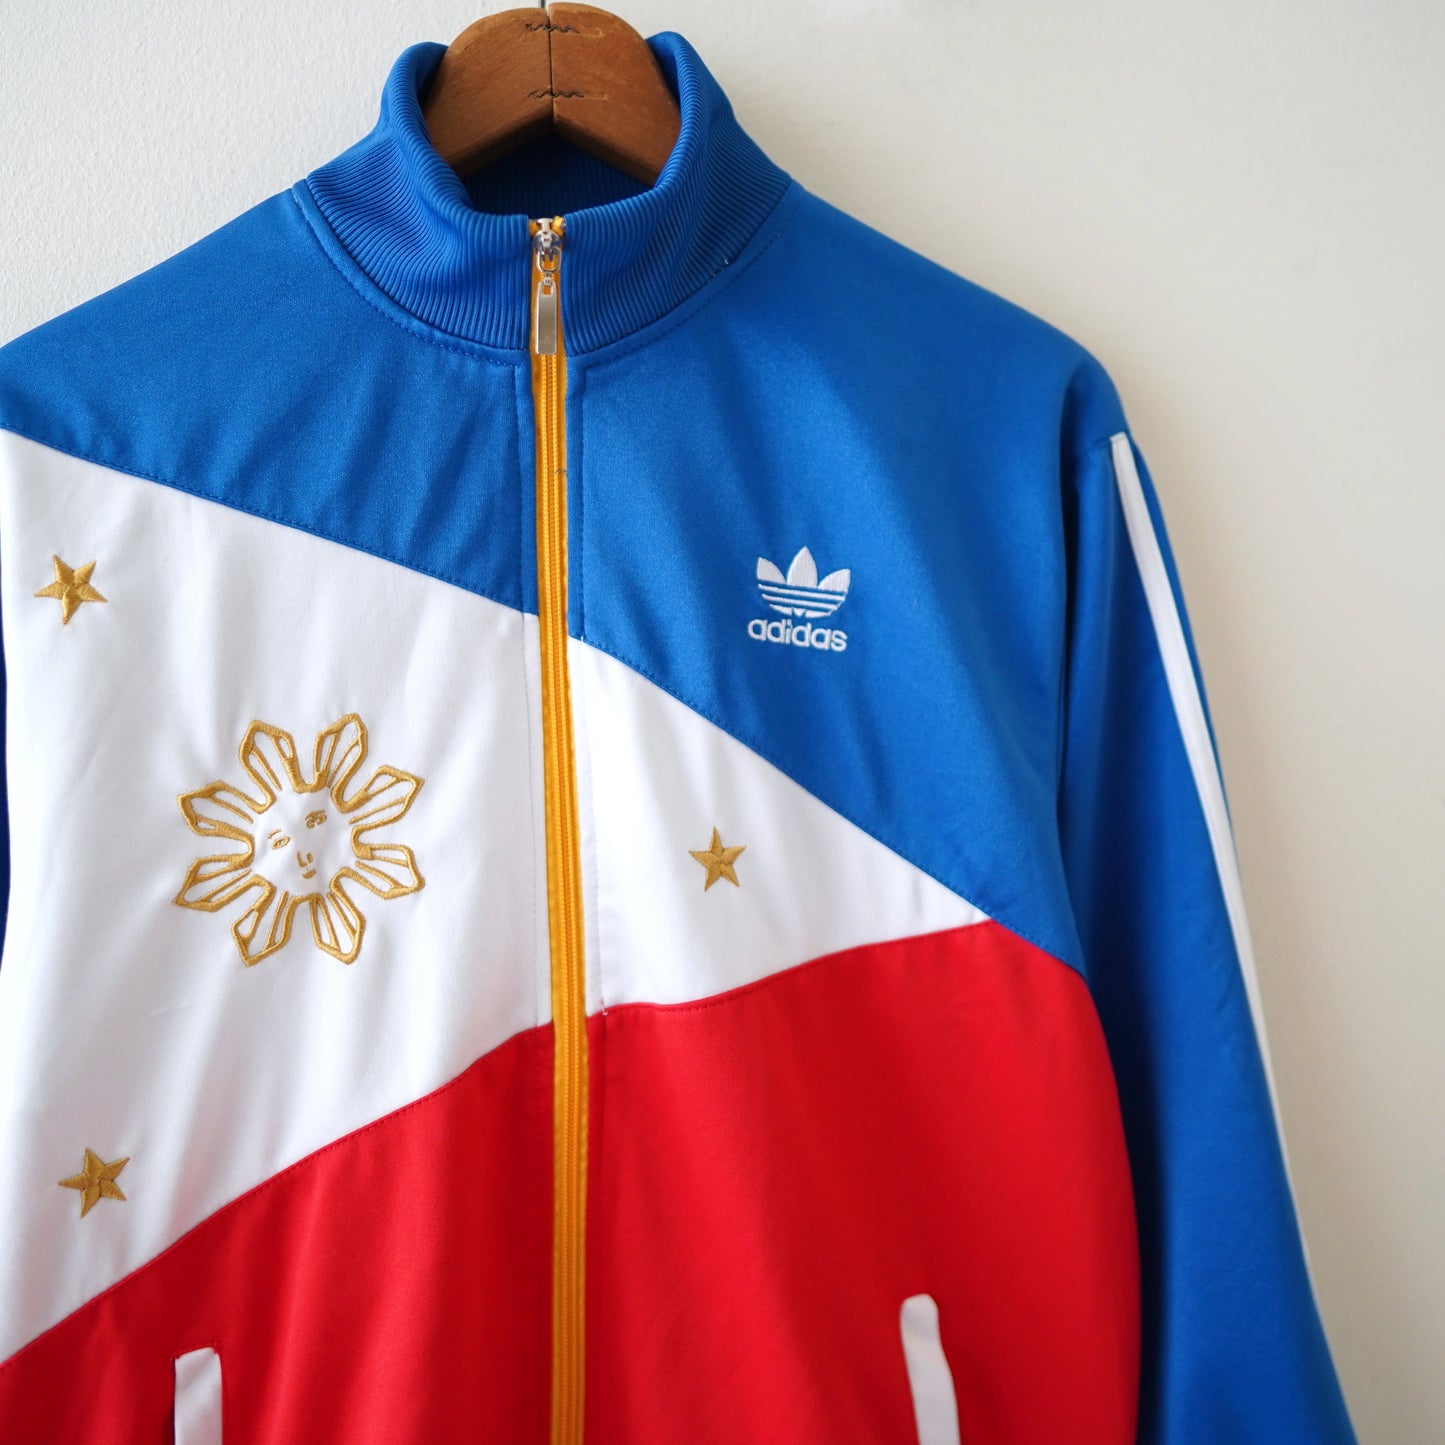 adidas philippines flag jersey